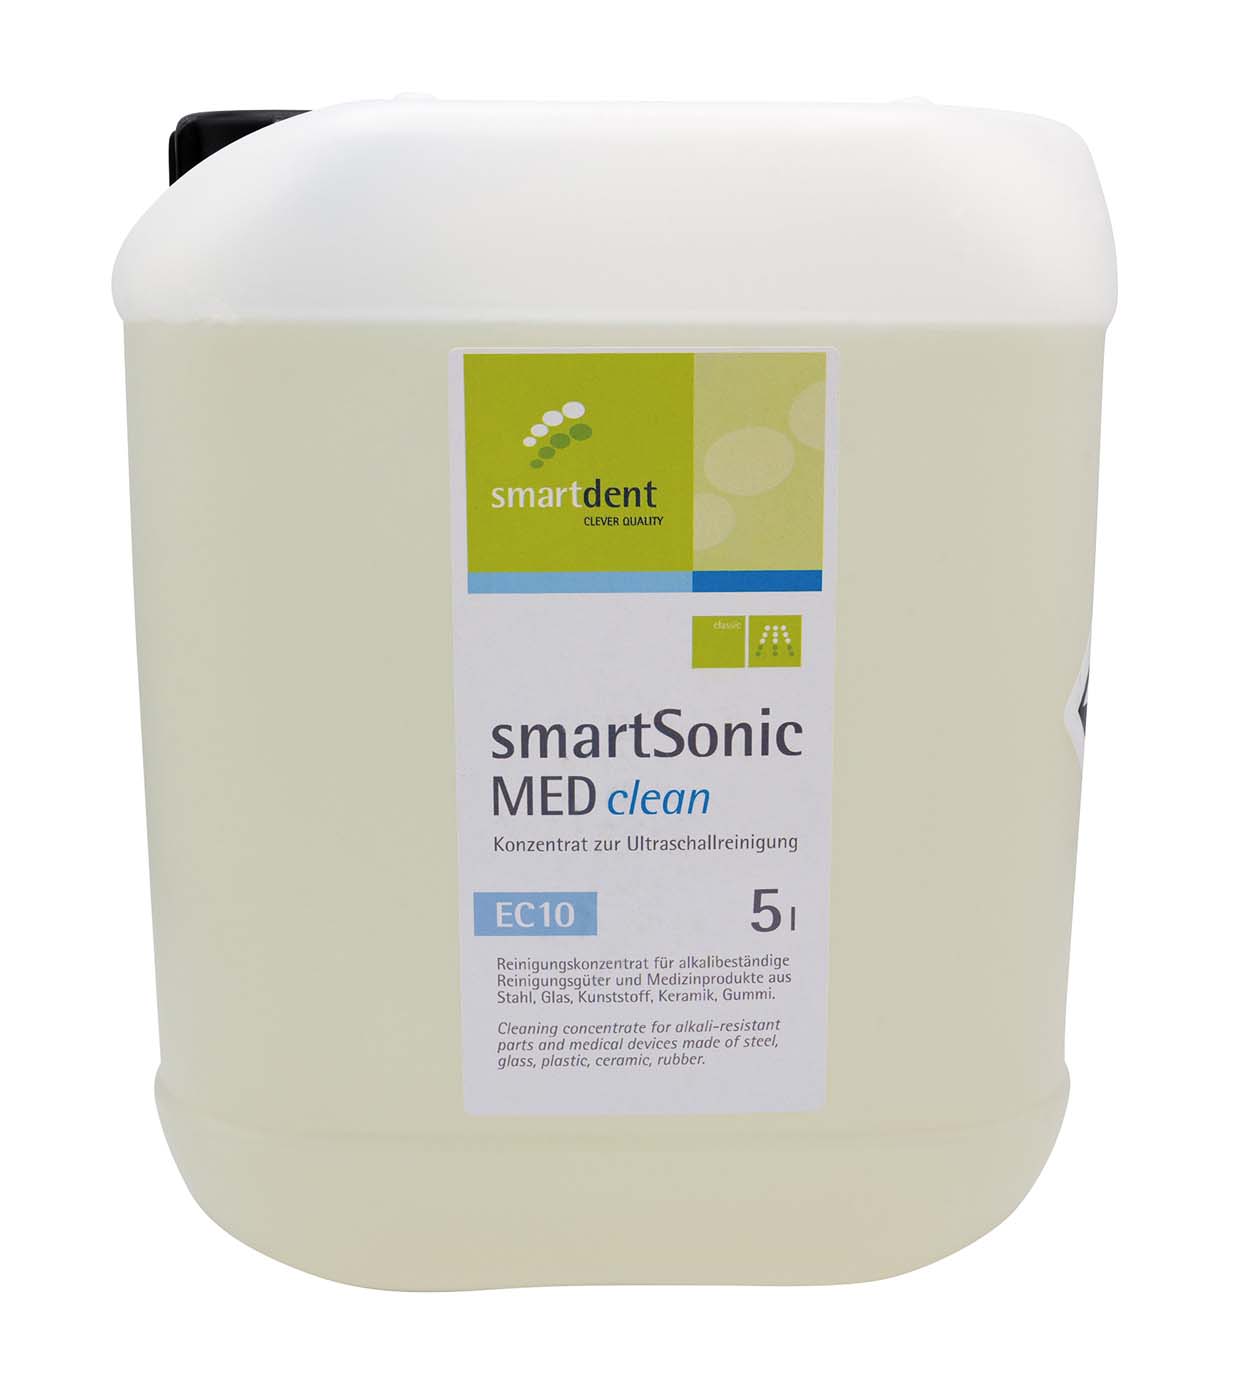 smartSonic MED clean EC 10 smartdent